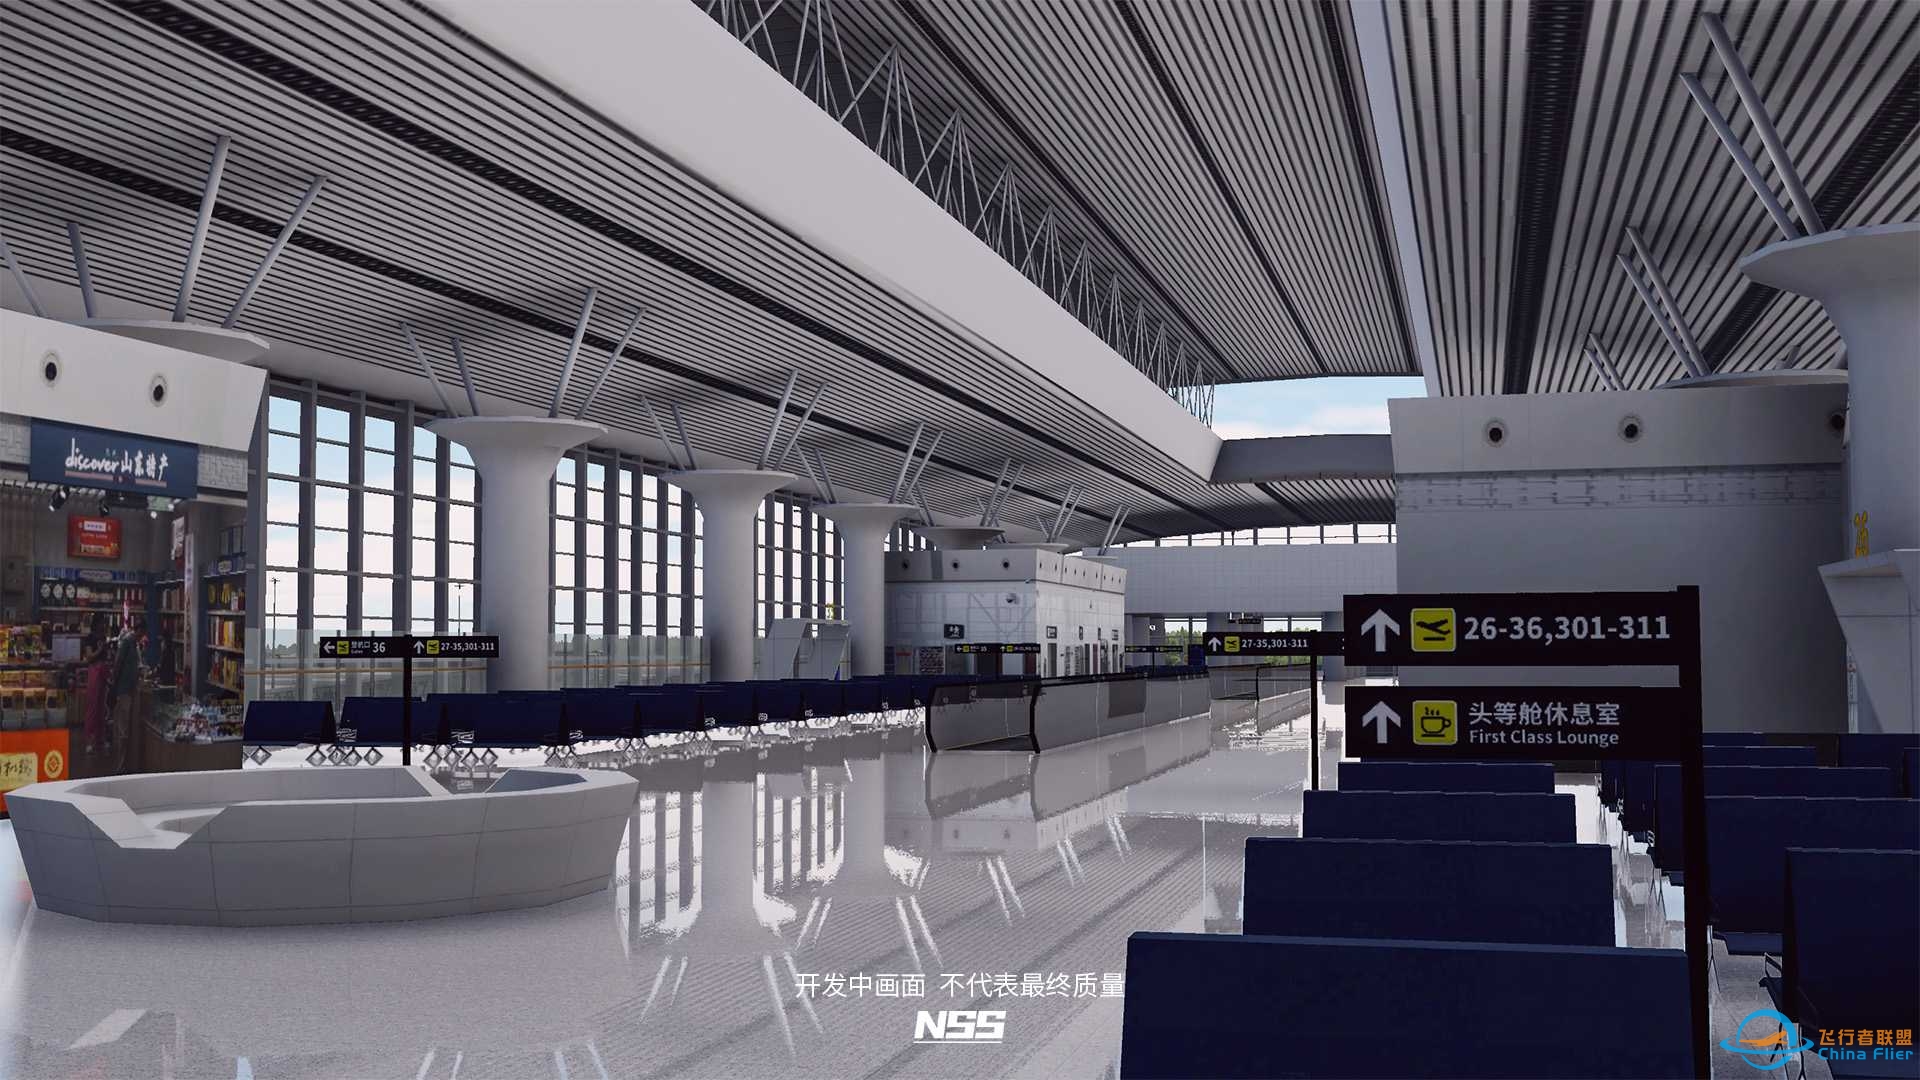 NSS地景开发组 | ZSJN | 济南遥墙国际机场项目最新进展-2521 